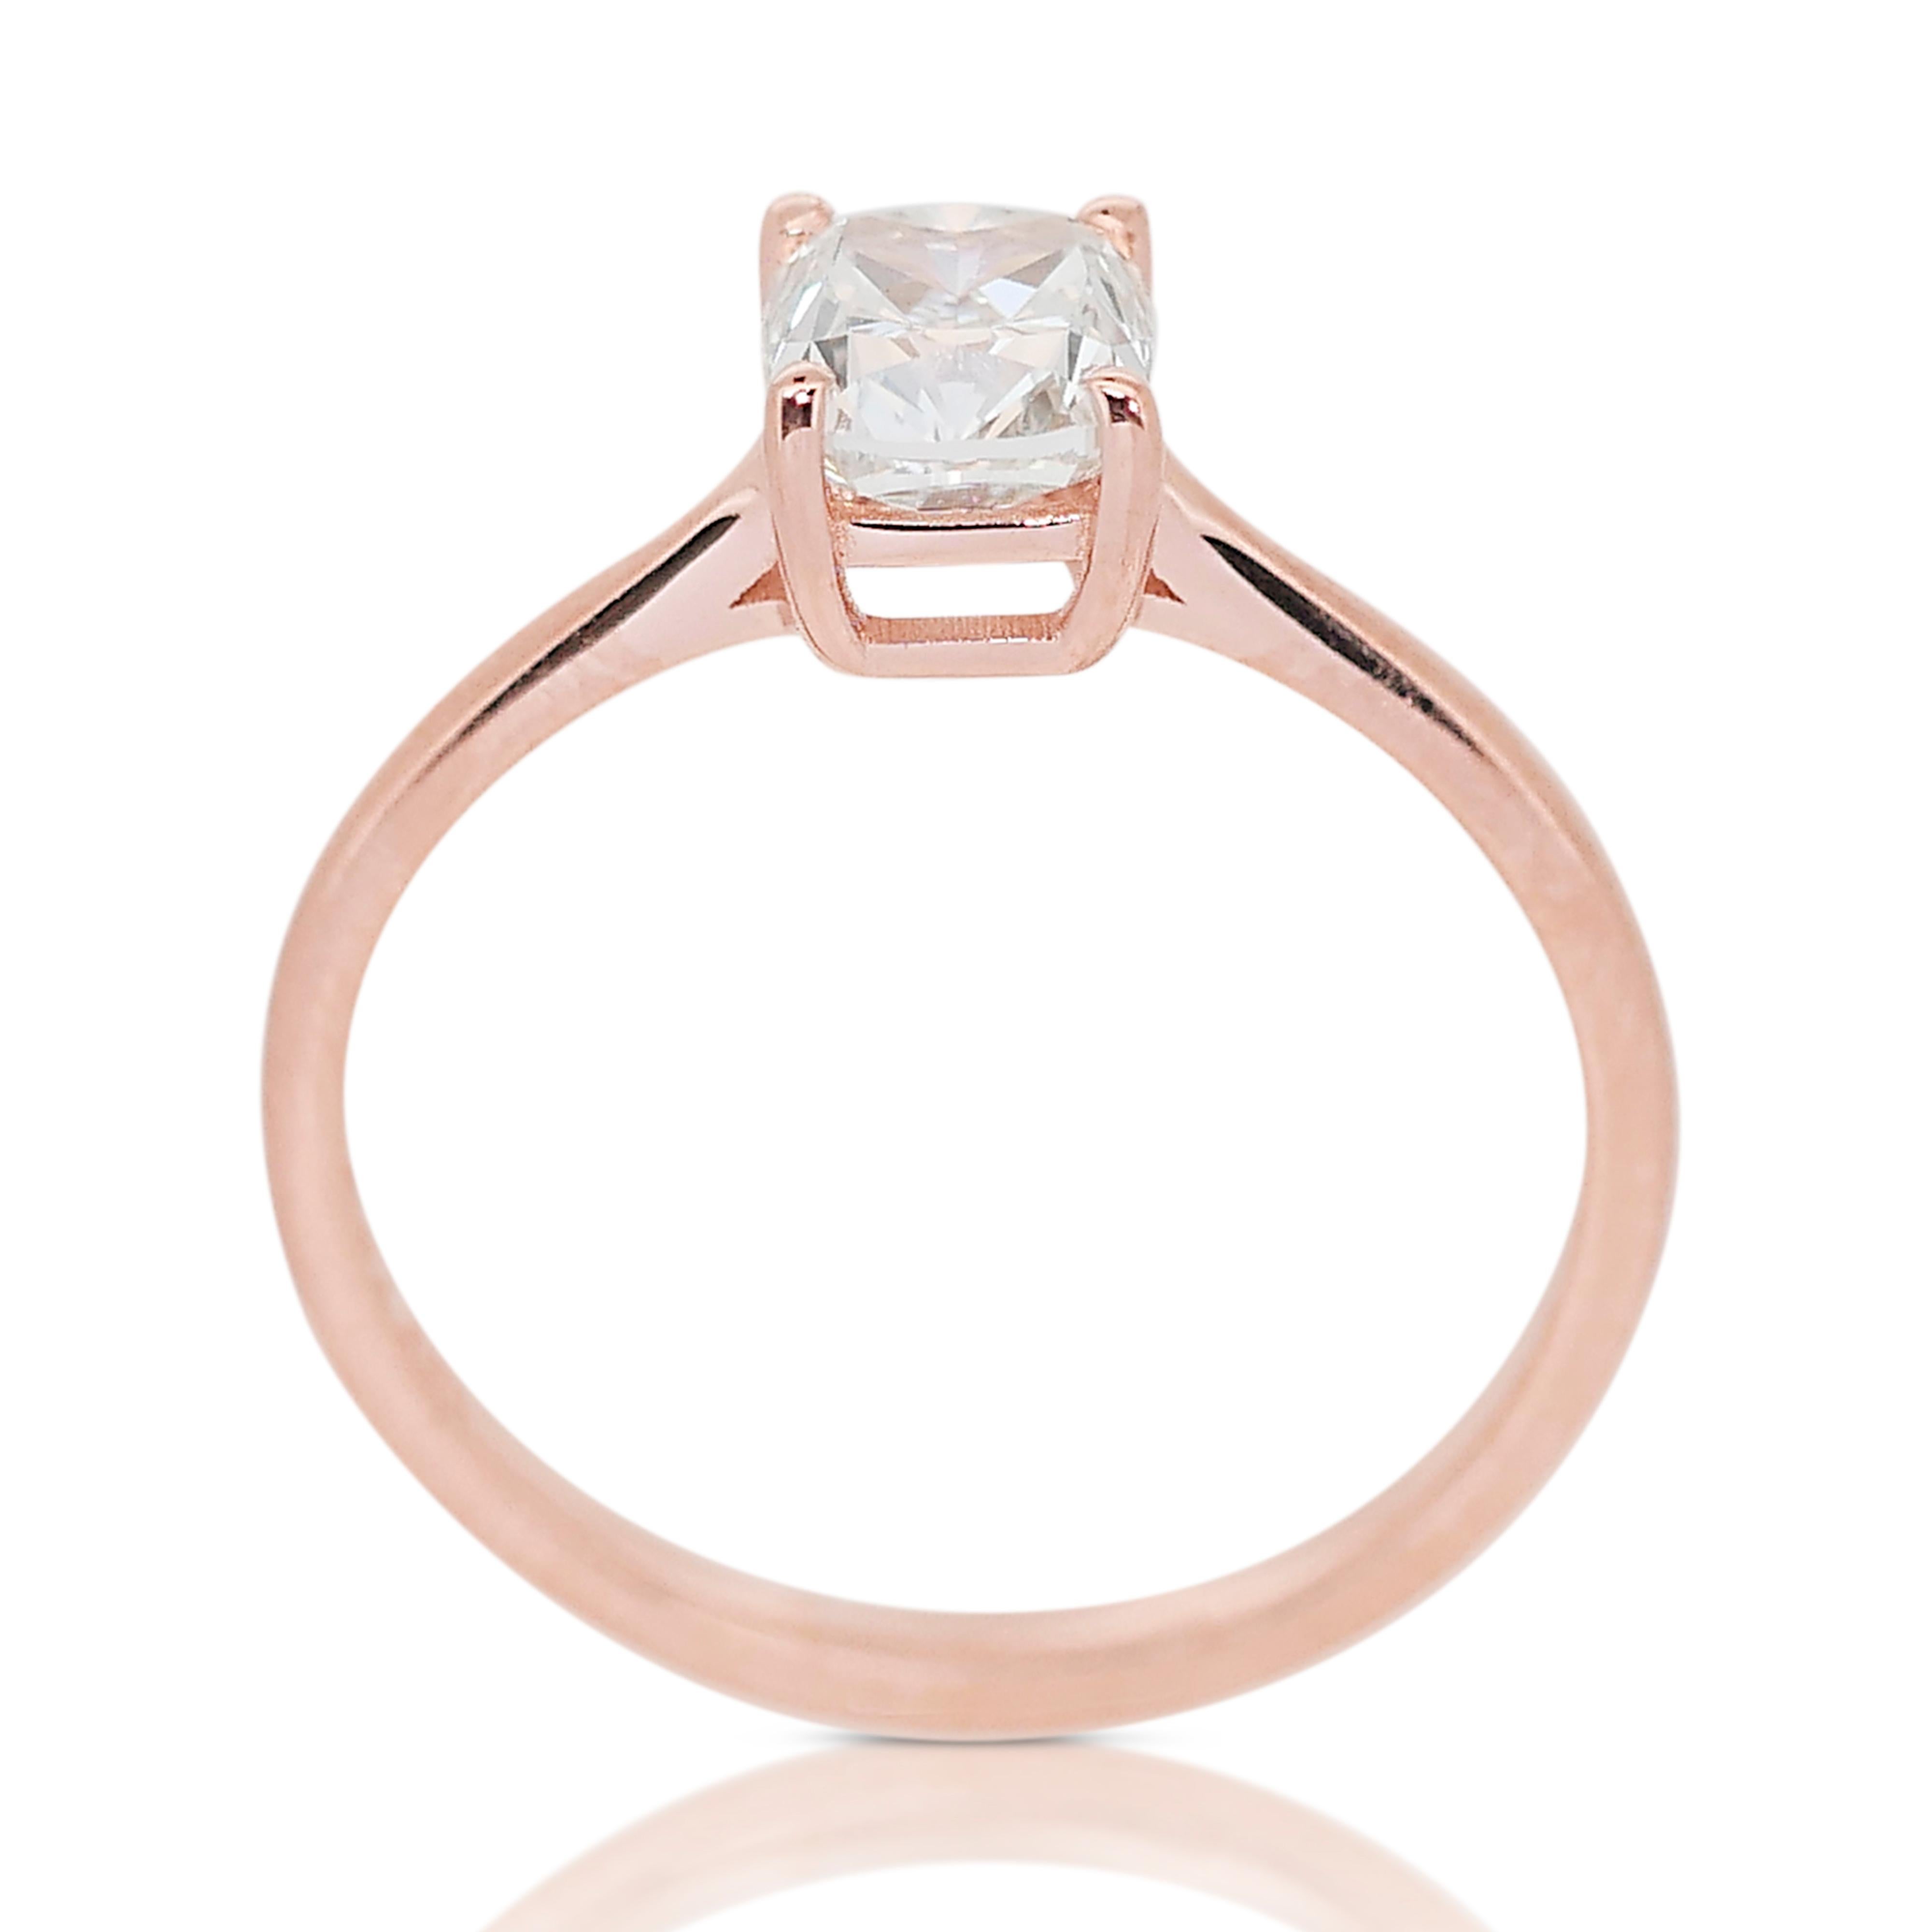 Precious 14k Rose Gold Natural Diamond Solitaire Ring w/0.90 ct - IGI Certified 2